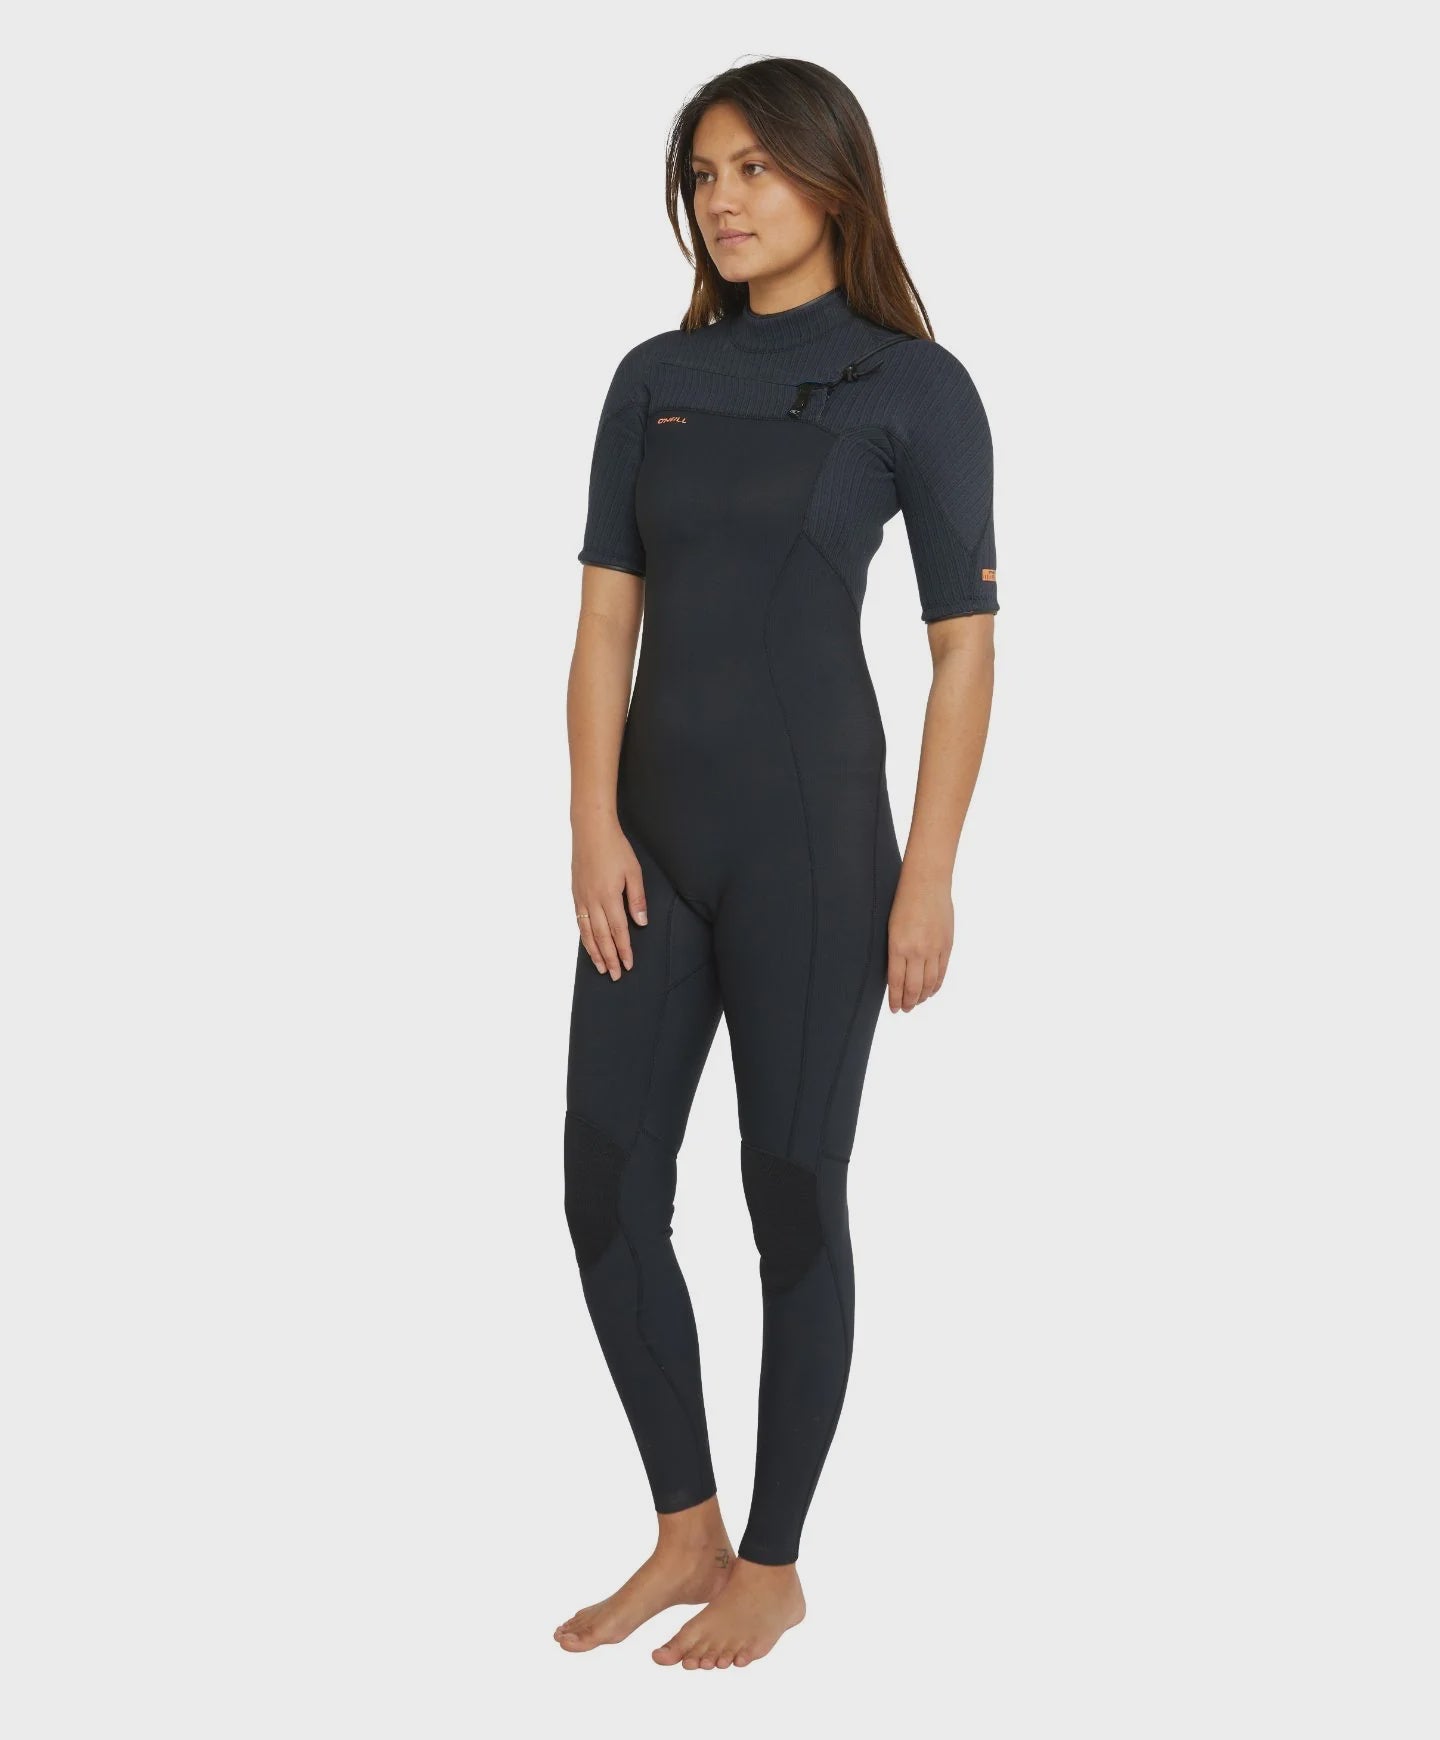 Women's Hyperfreak Short Sleeve Steamer 2mm Wetsuit